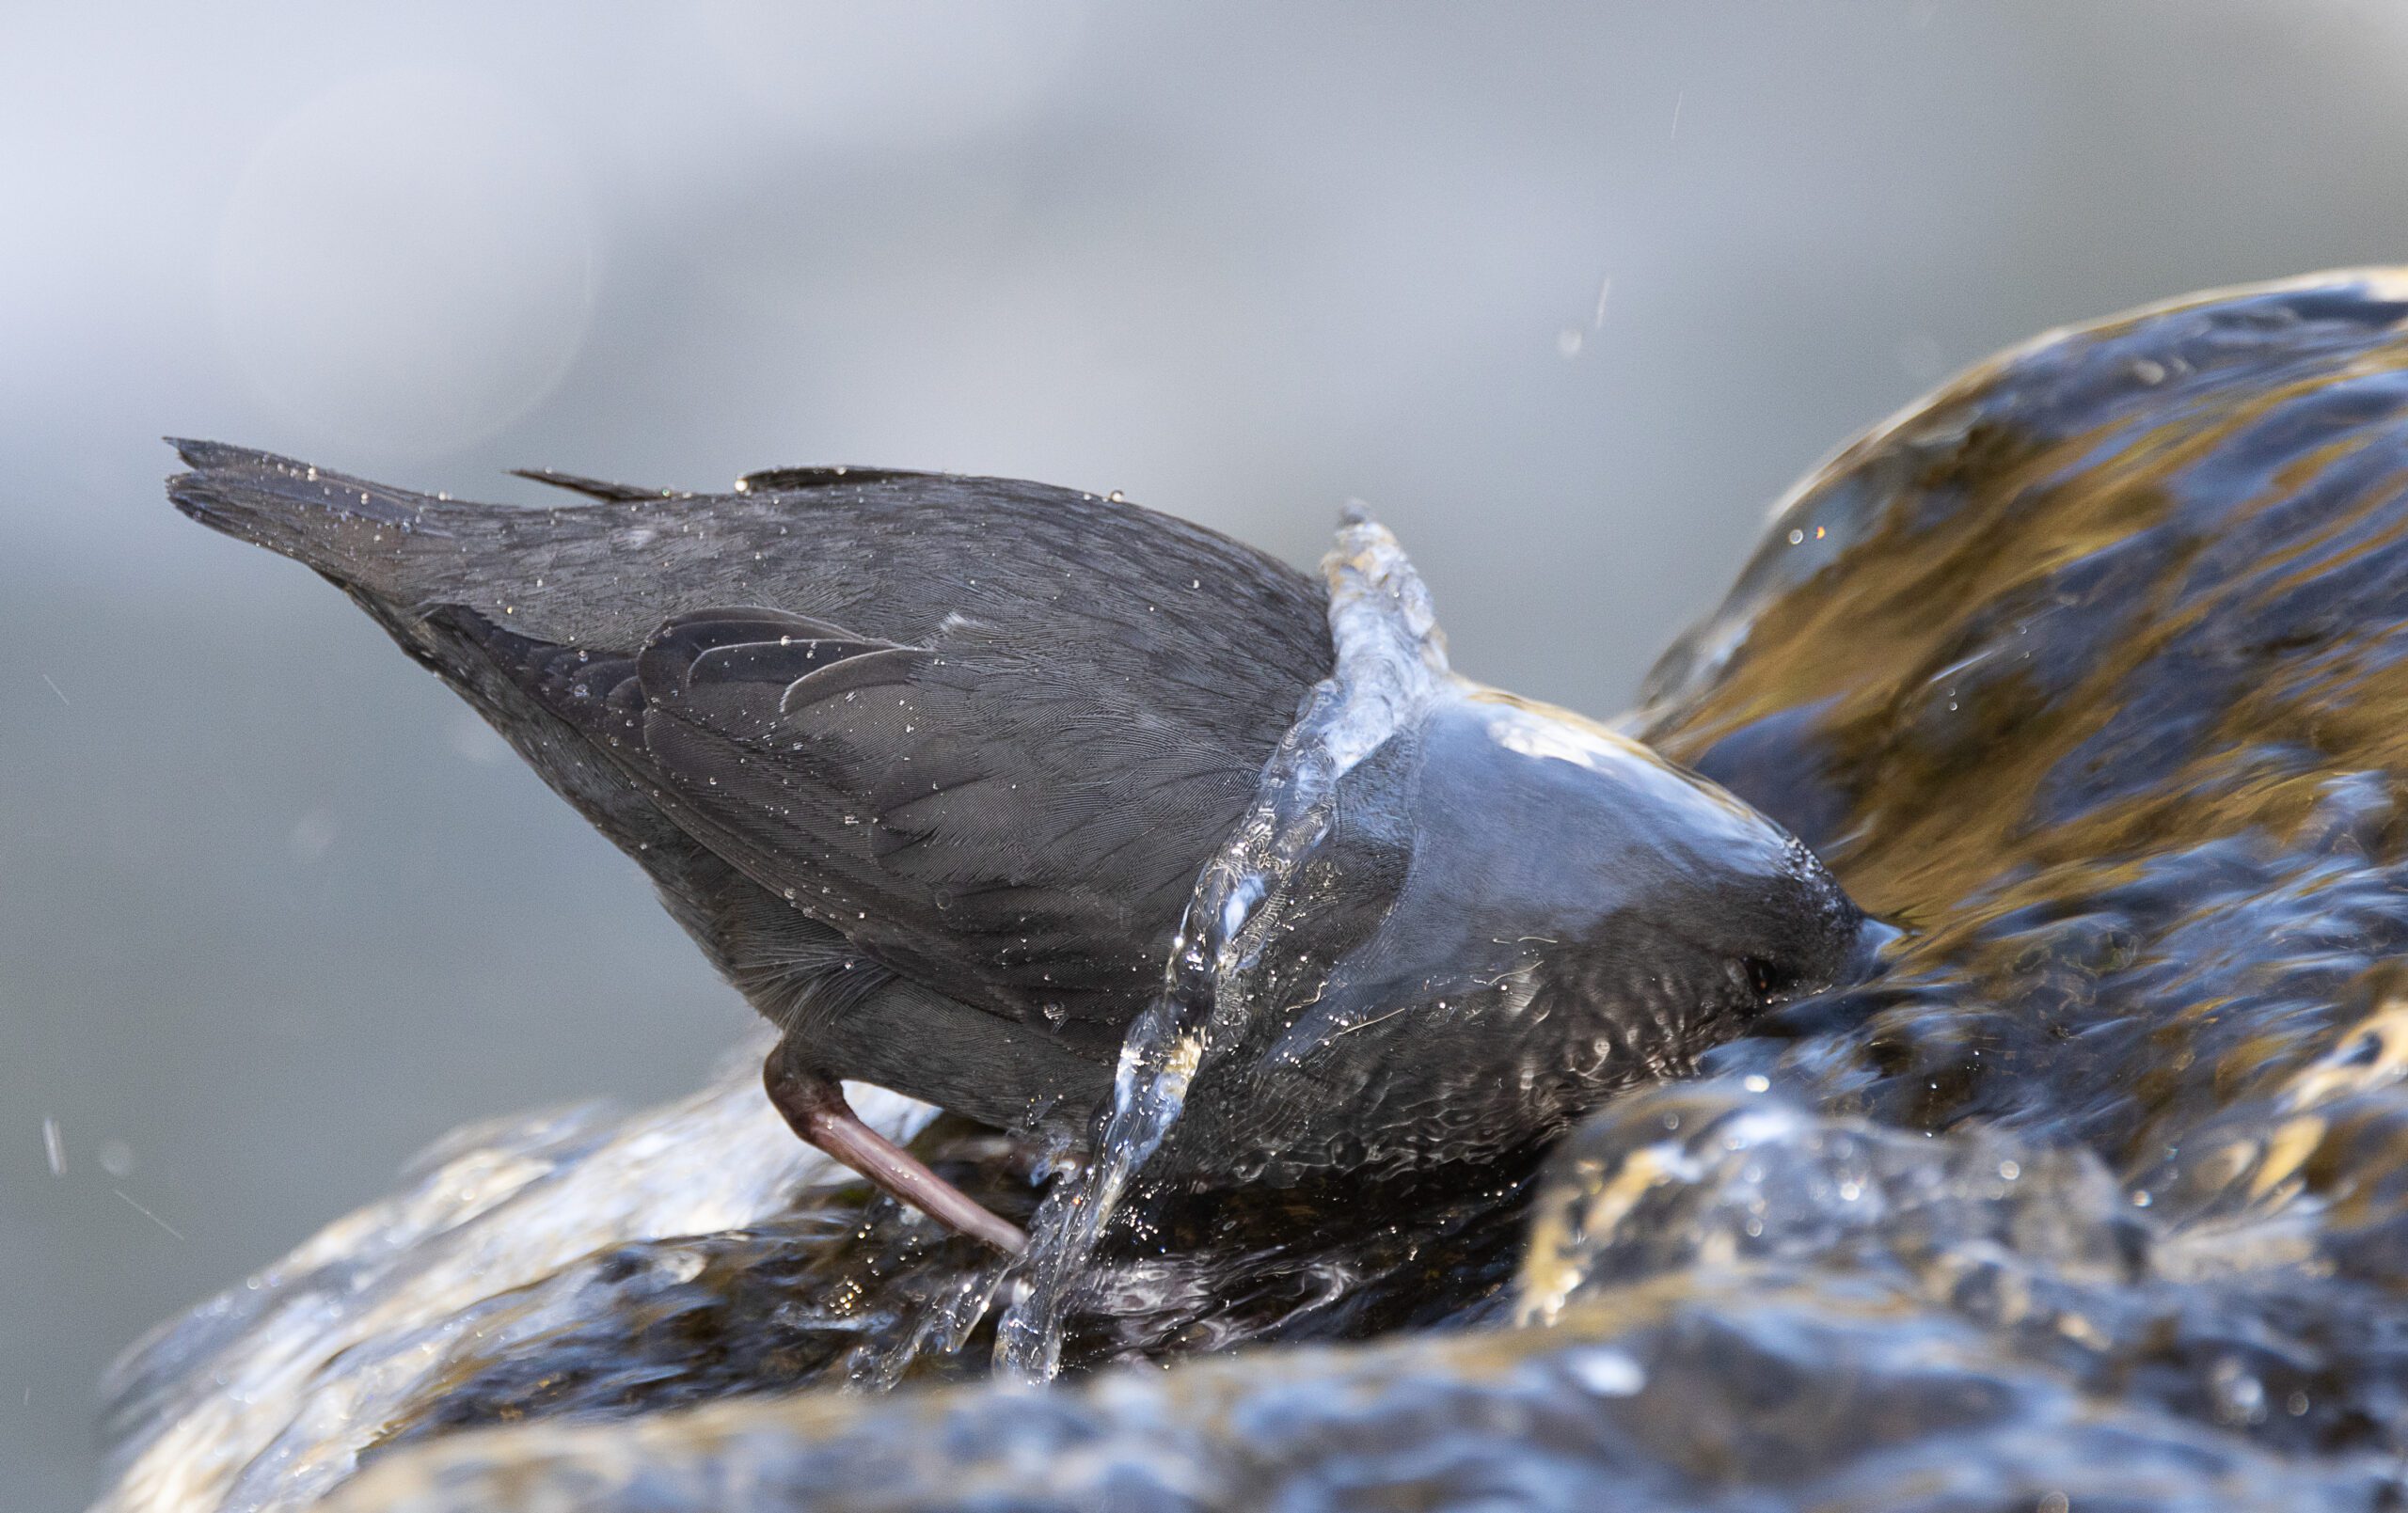 A gray bird puts its head underwater